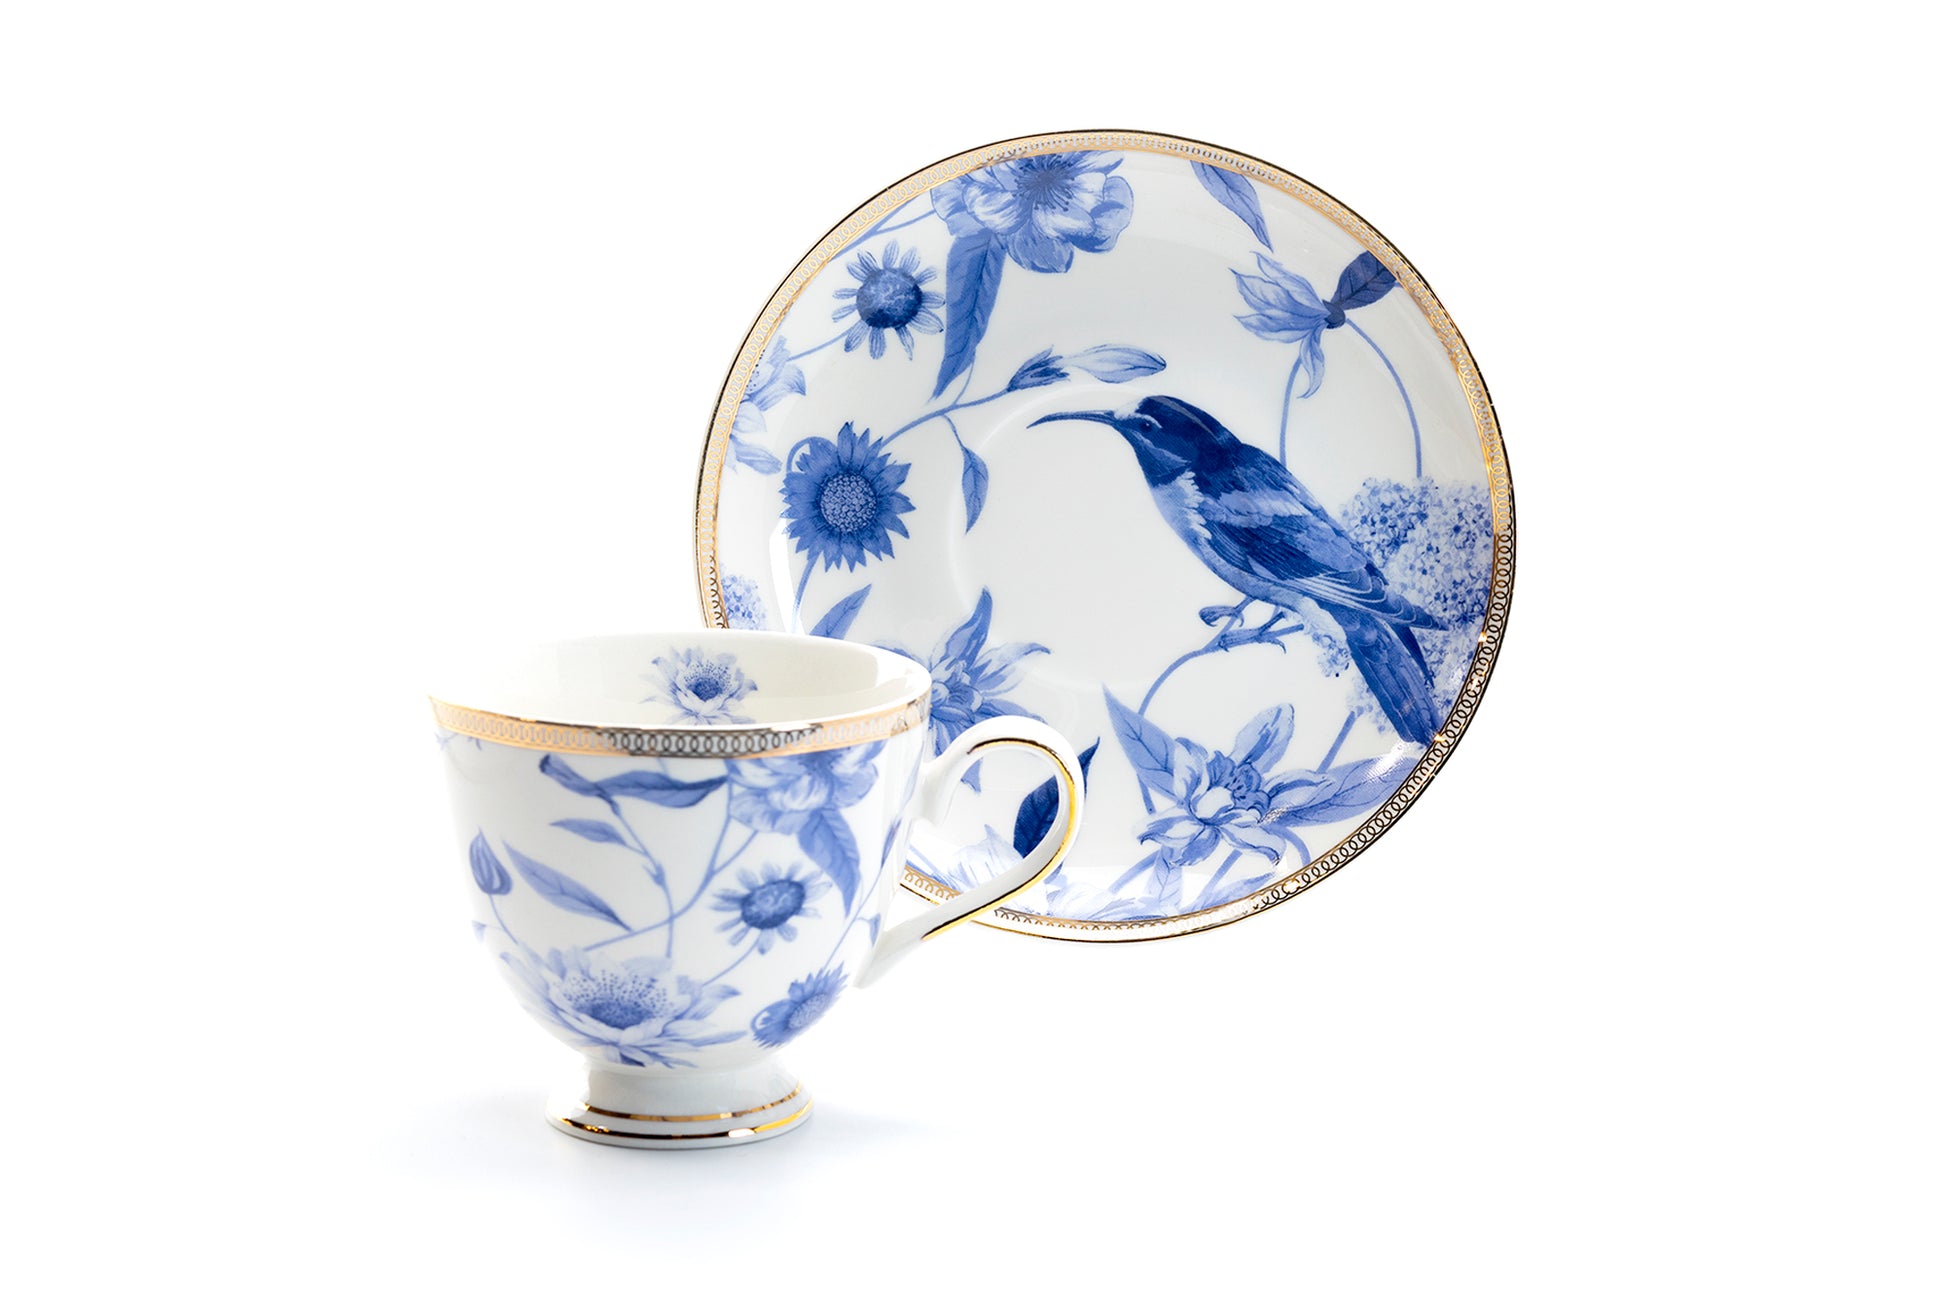 Blue Floral Harmony Ceramic Tea Cup Wedding Gift Sets - MASU